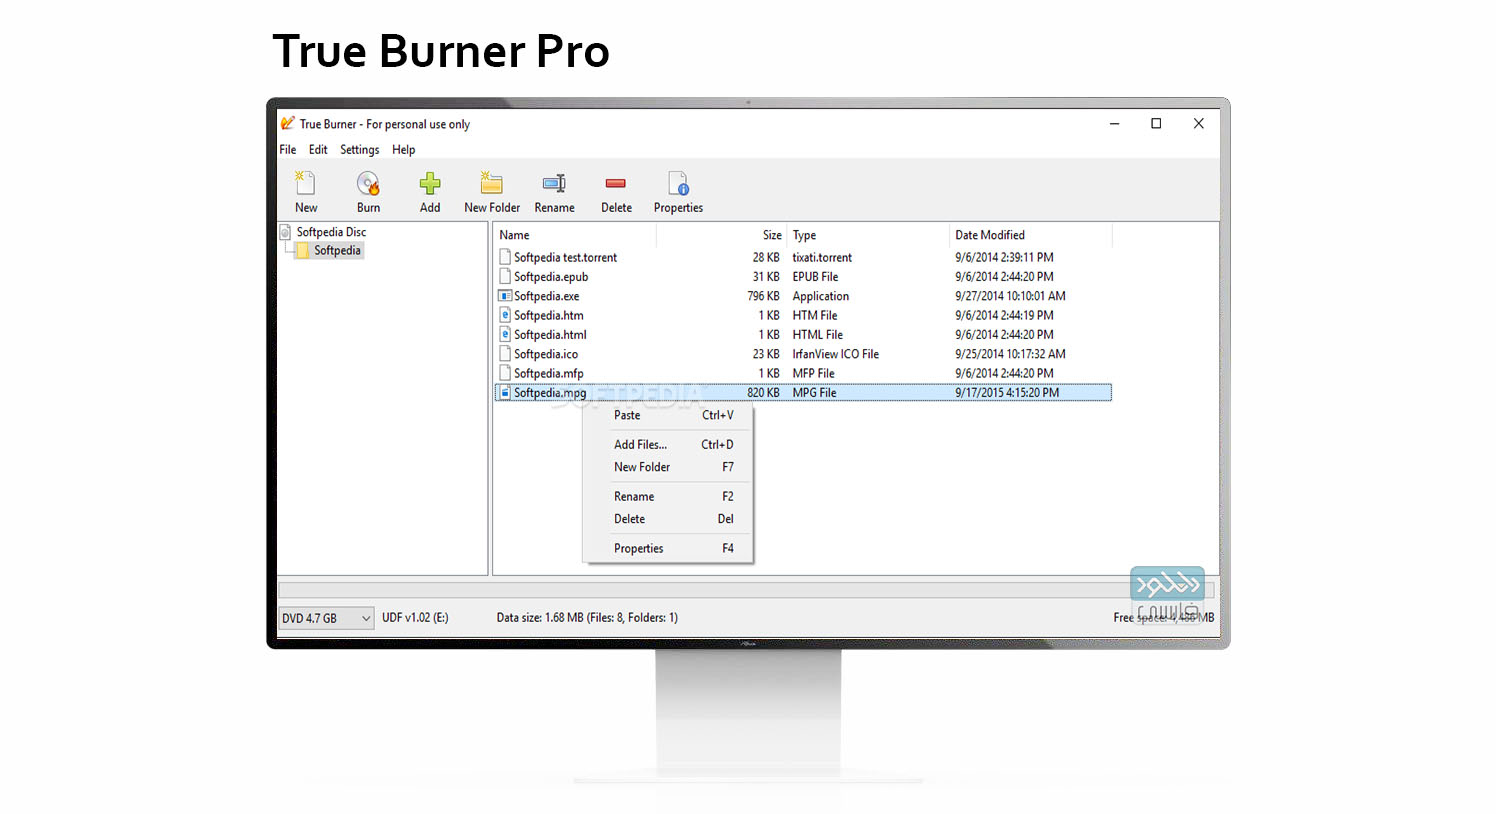 True Burner Pro 9.5 download the new version for windows